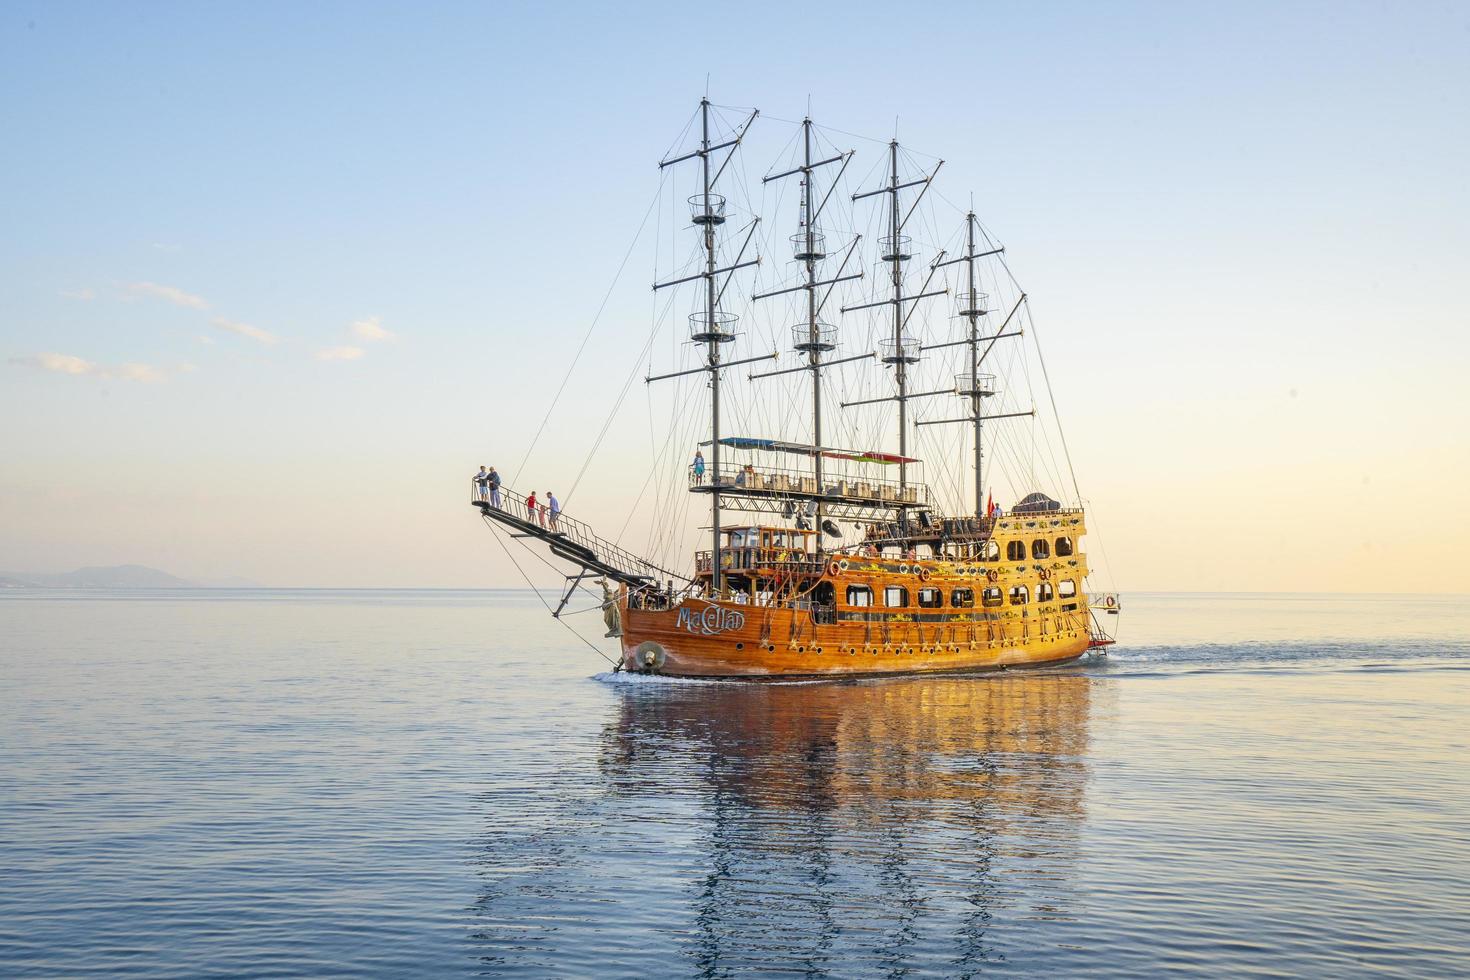 alanya, antalya turquie 2022, excursion en bateau tourisme mer, été photo